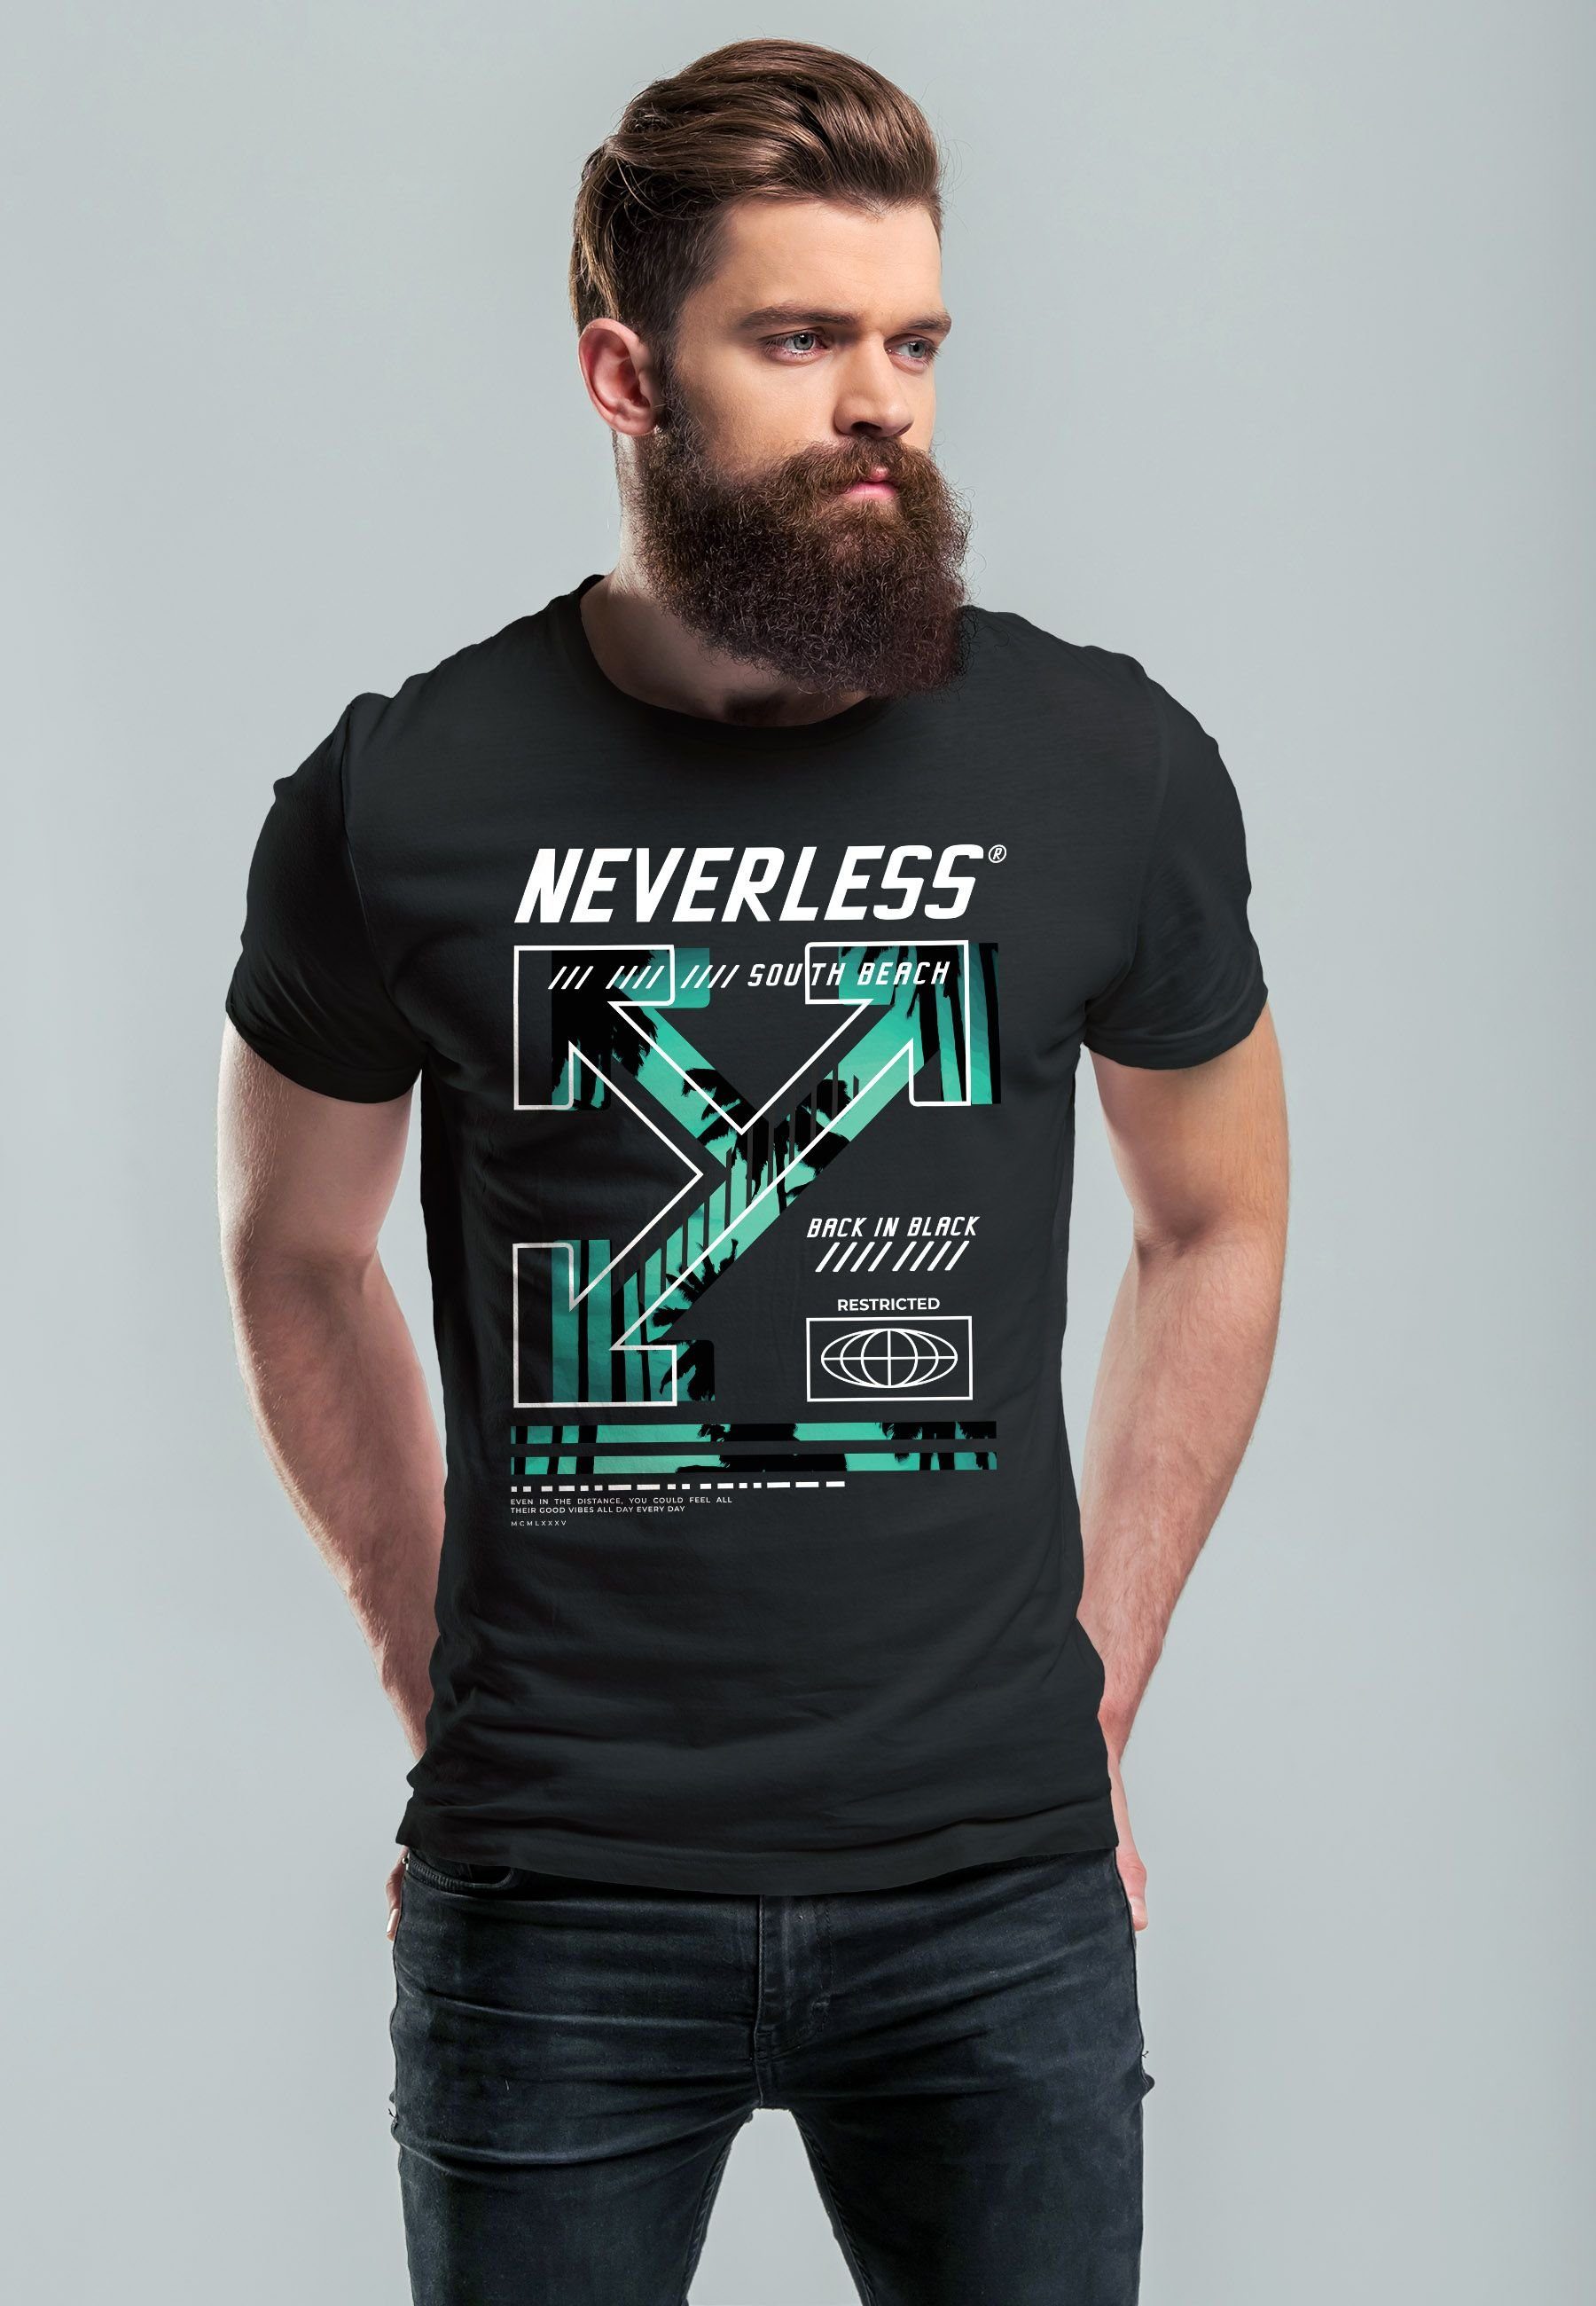 Neverless Print-Shirt Herren T-Shirt Beach South Street Fashion Print Techwear mit schwarz Print Text Aufdruck